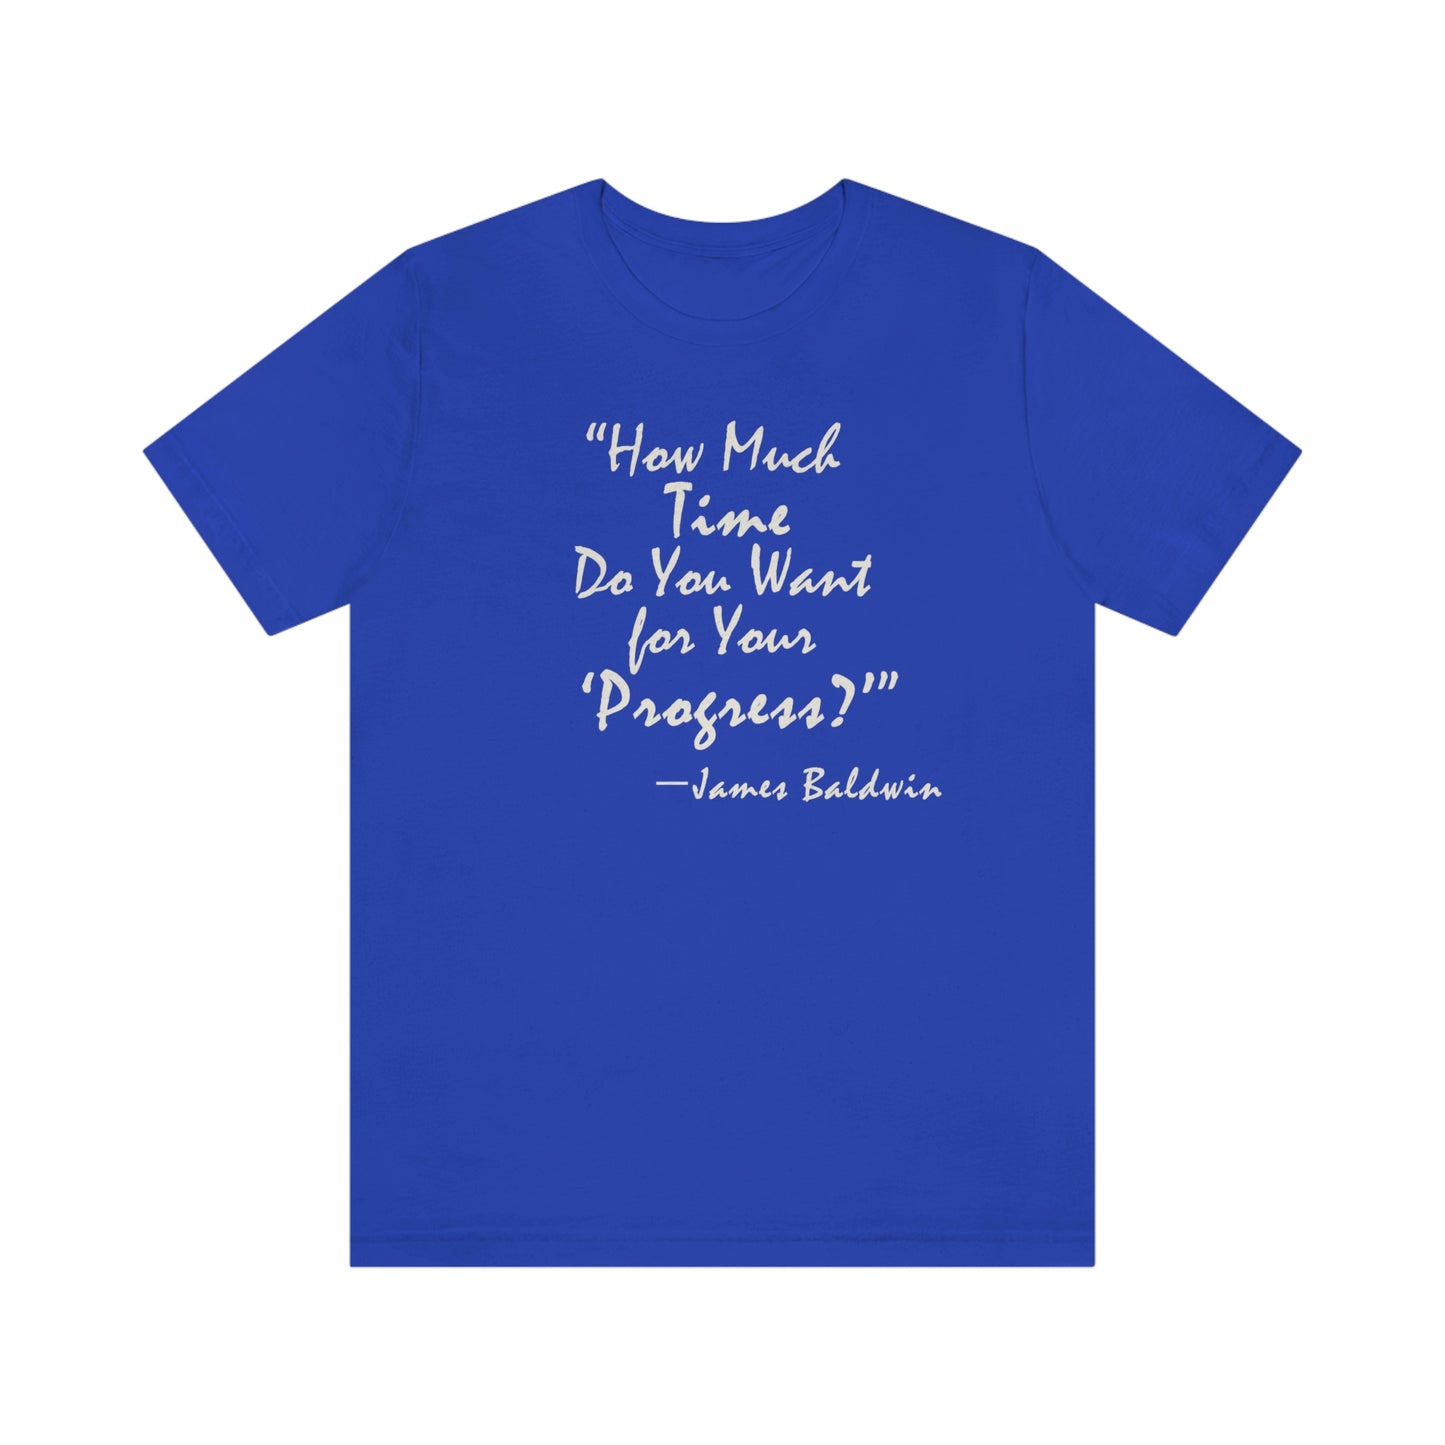 James Baldwin Quote - "Progress" - Unisex T-Shirt